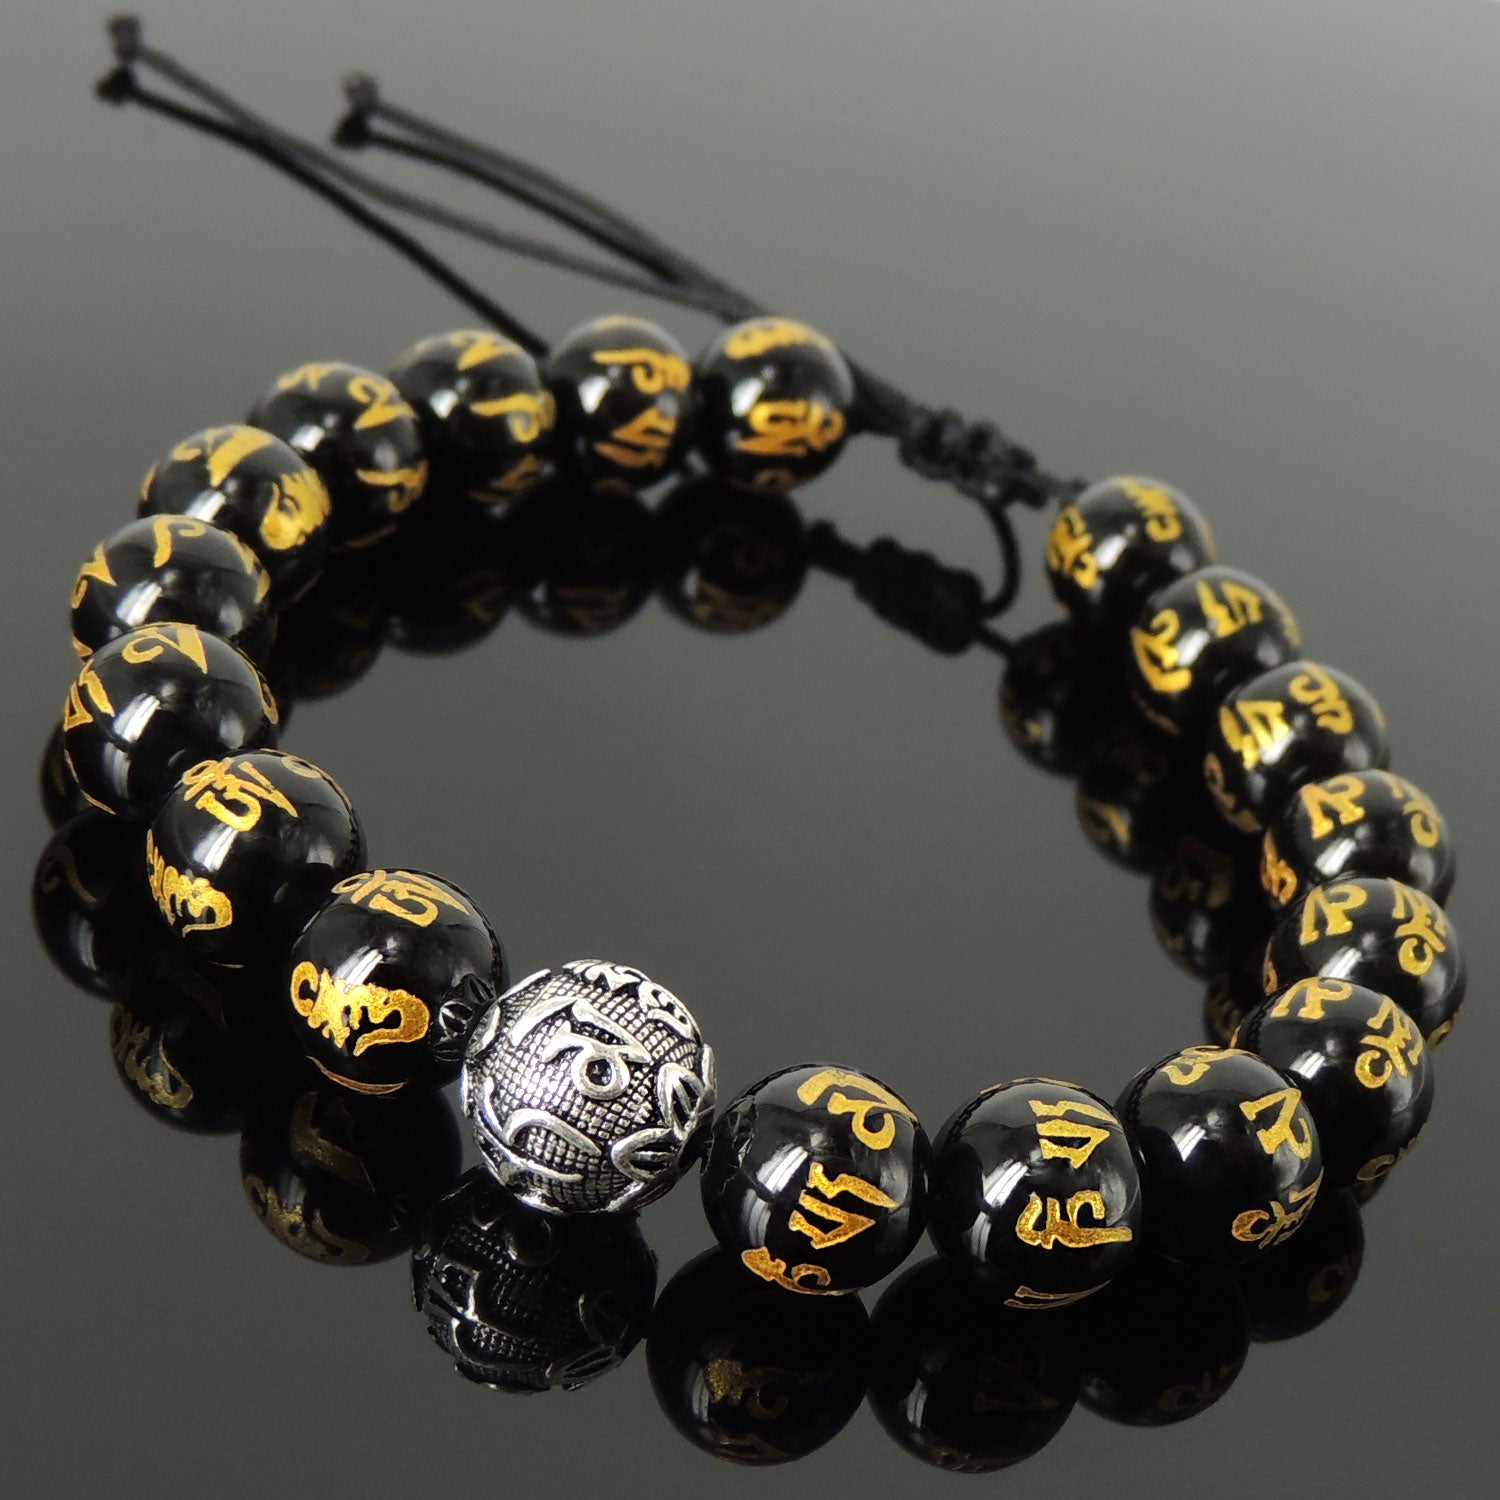 Handmade Adjustable Braided Bracelet - Men's Women's Custom Jewelry, Protection with 10mm Bright Black Onyx Healing Gemstones, Gold Hot Stamp, Genuine S925 Sterling Silver Meditation Bead BR1790